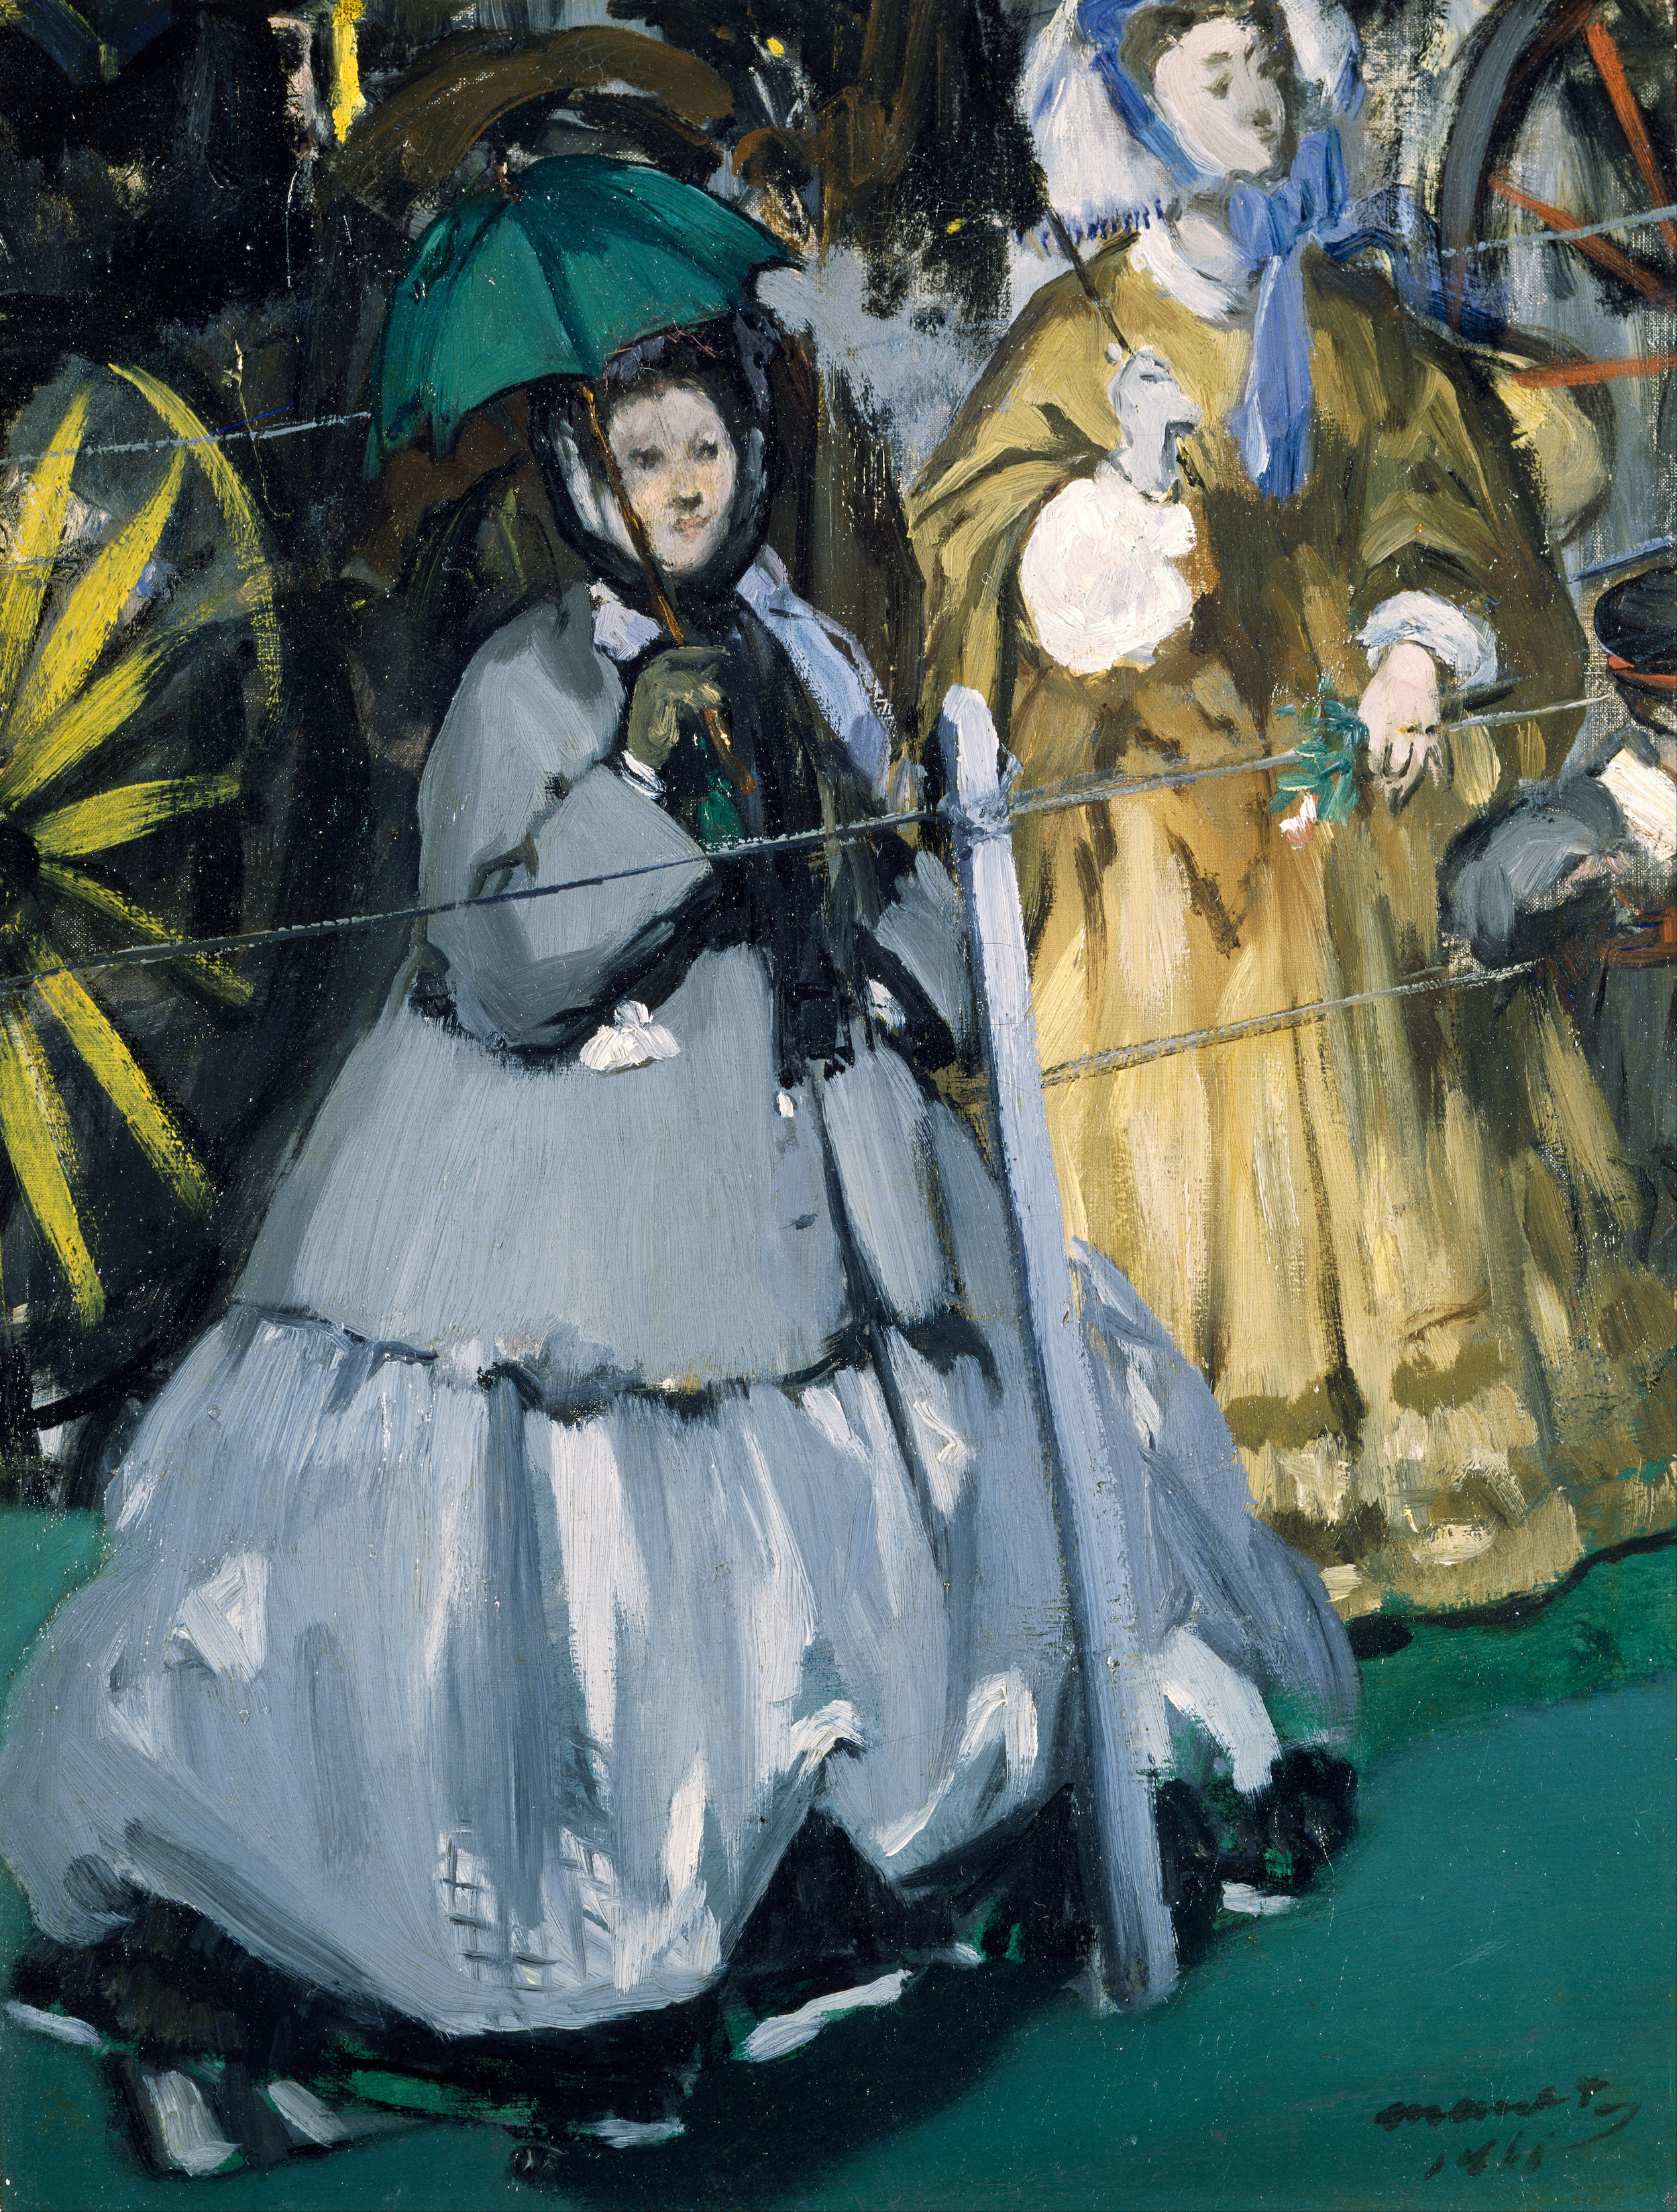 سيدات في سباق الخيل by Édouard Manet - 1866 - 42.2 x 32.1 سم 